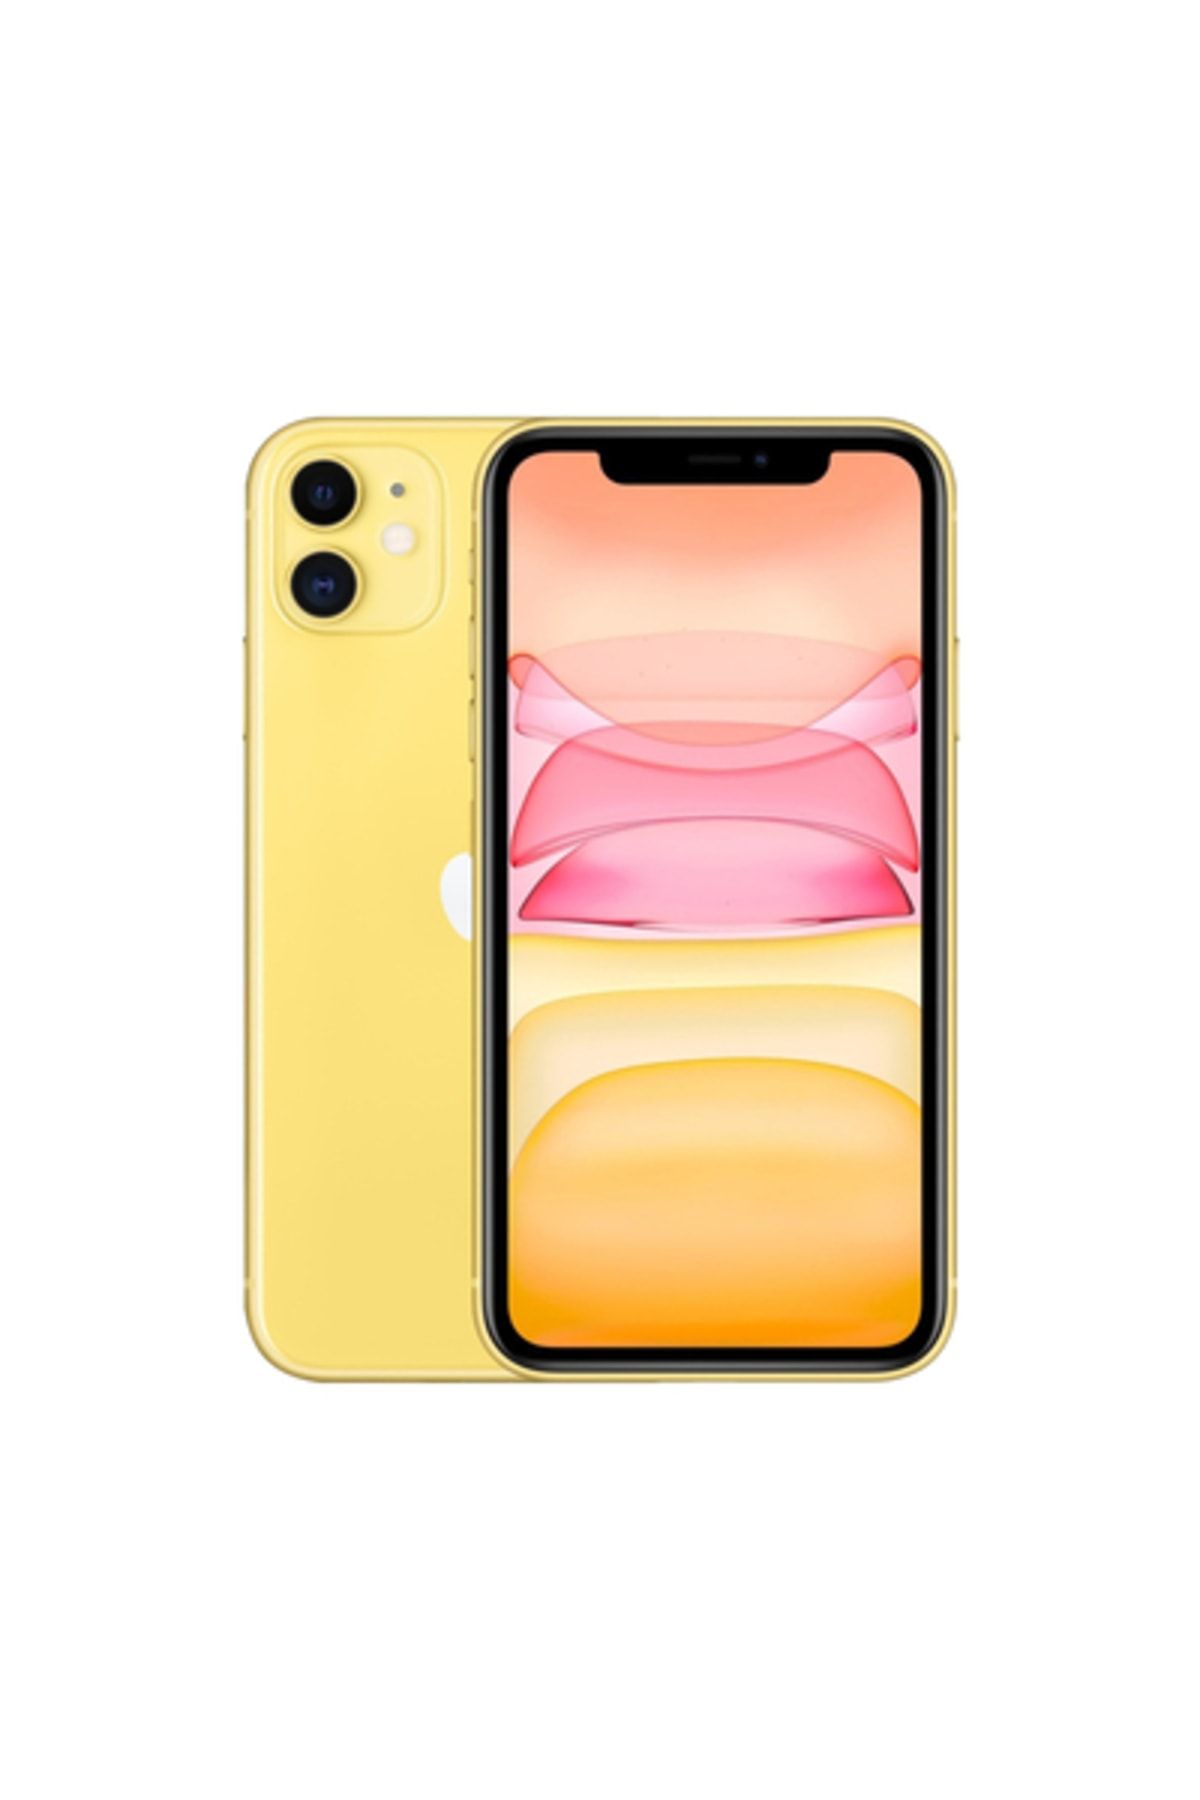 Apple Yenilenmiş iPhone 11 64 GB Sarı B Grade